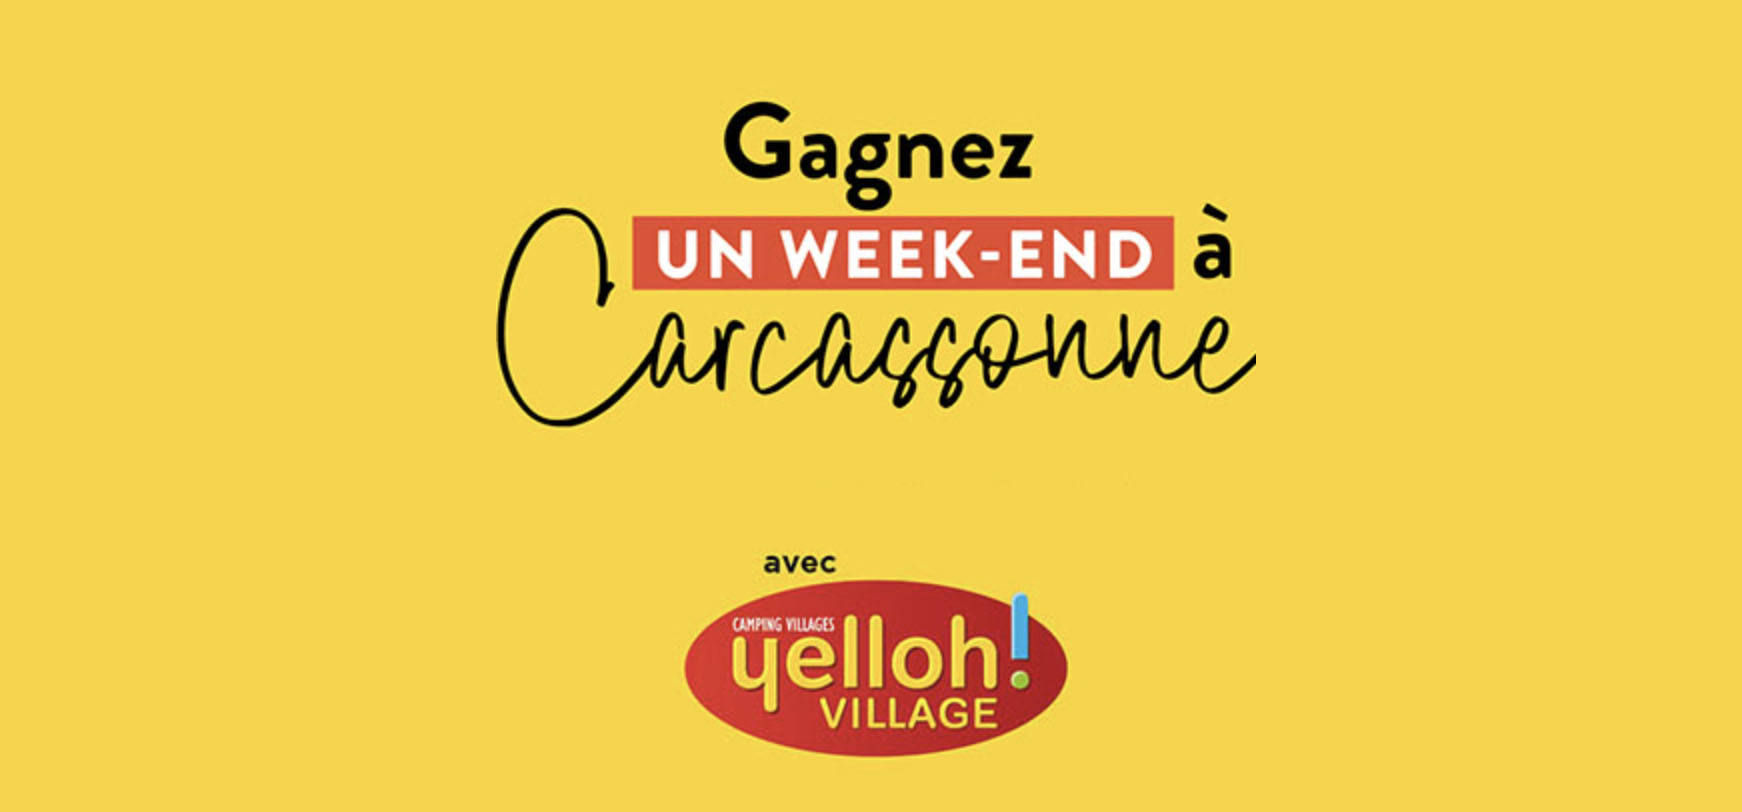 concours carcassonne